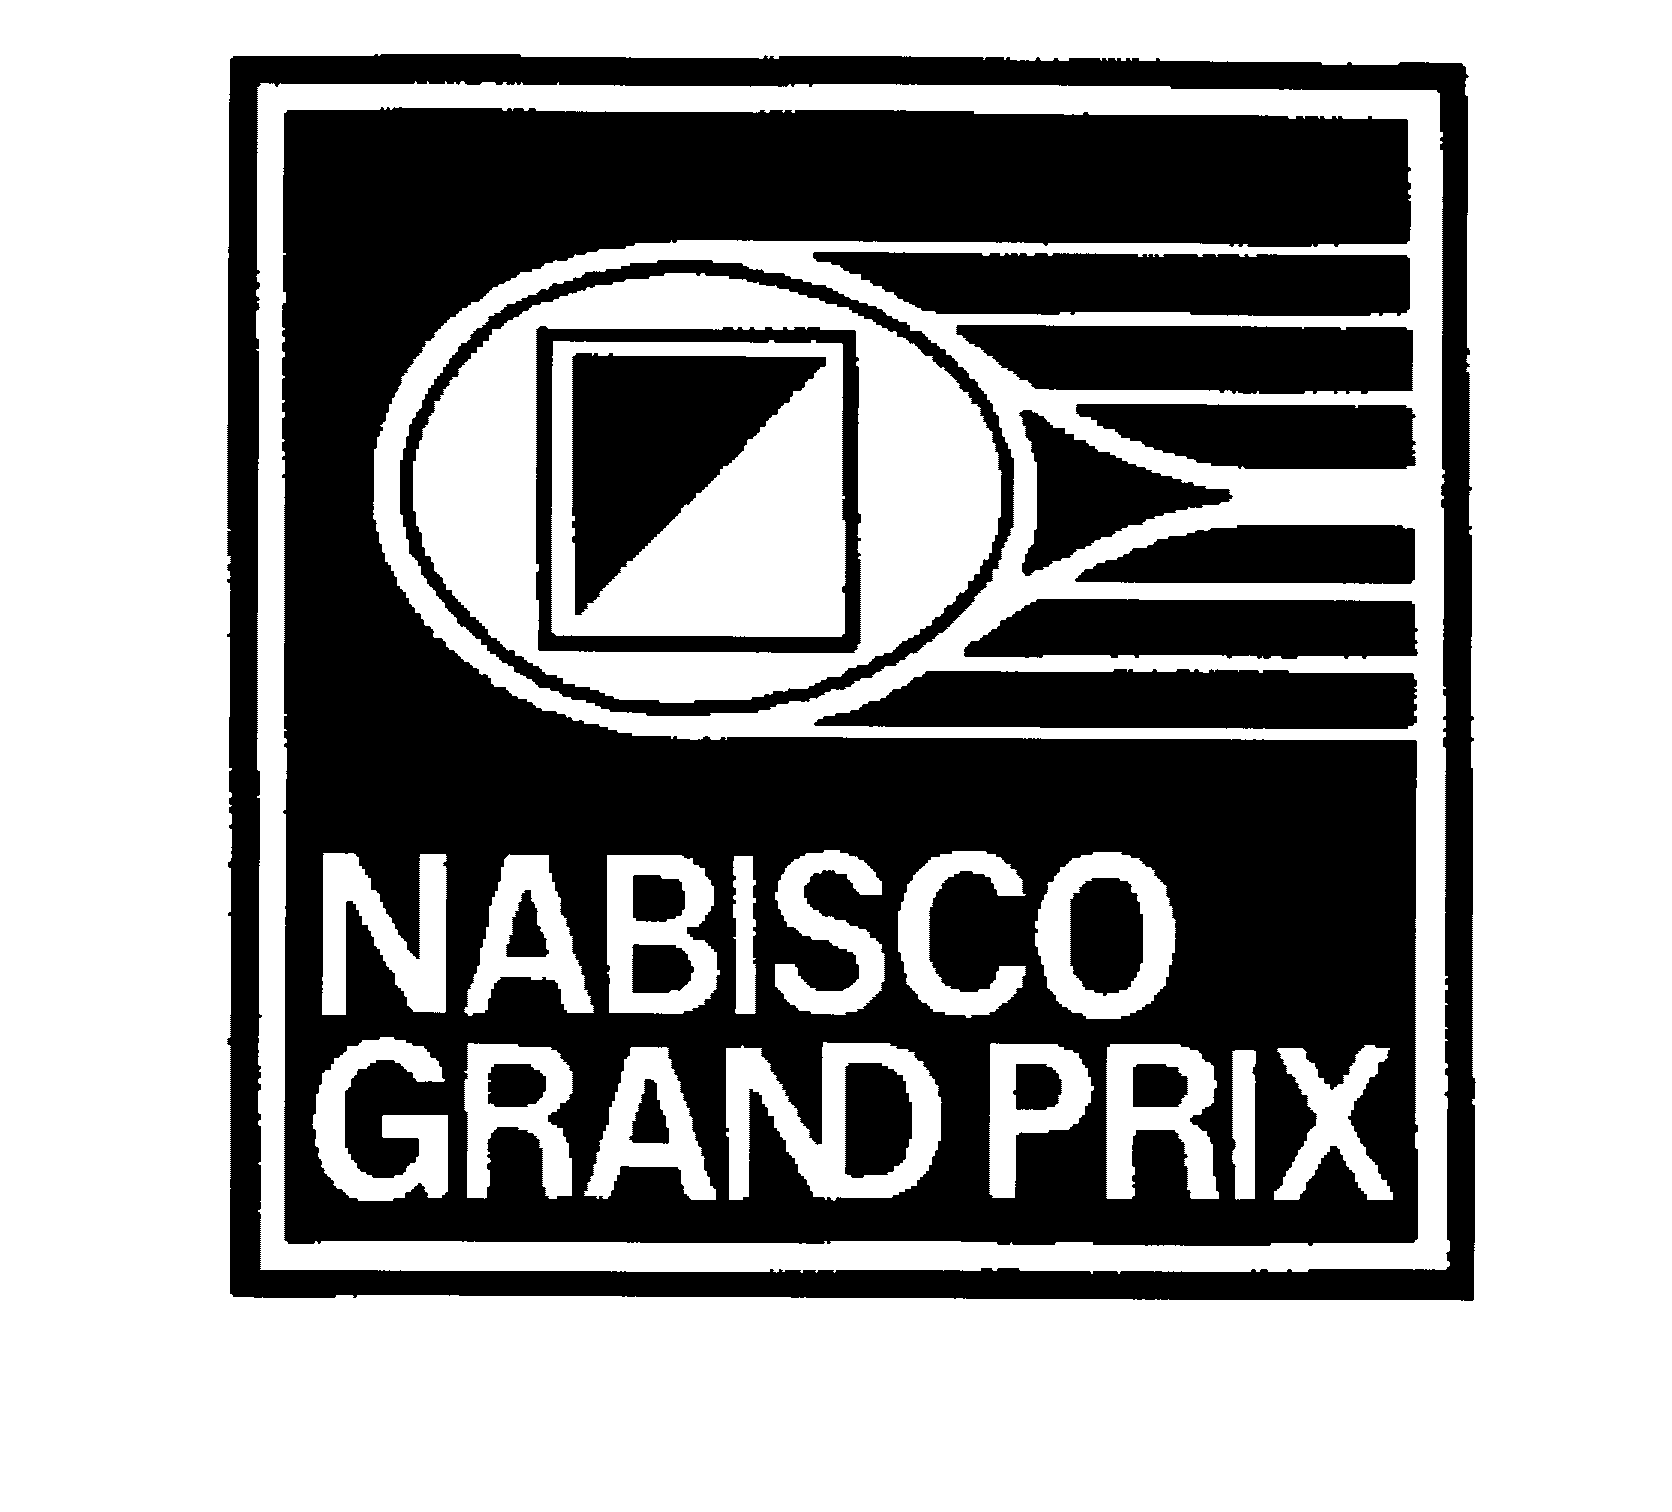  NABISCO GRAND PRIX